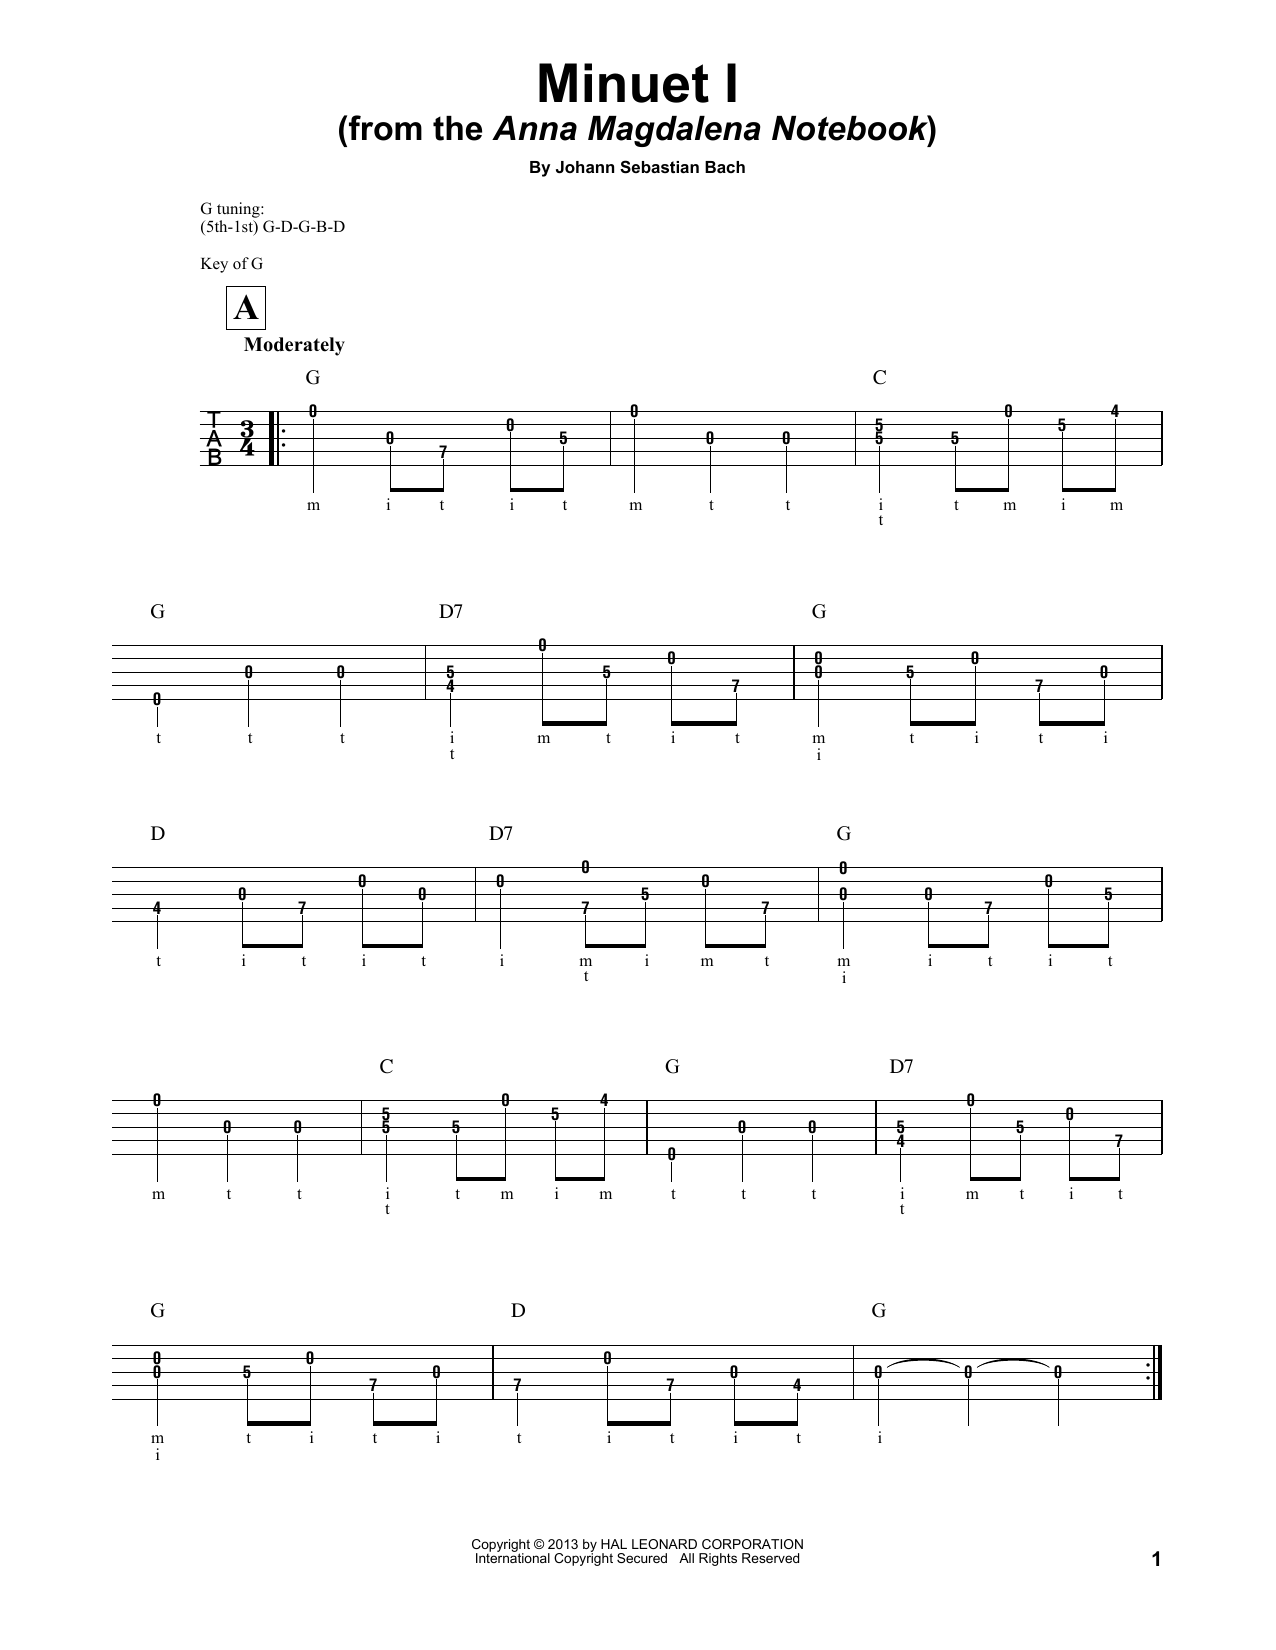 Mark Phillips Minuet I (Anna Magdalena) Sheet Music Notes & Chords for Banjo - Download or Print PDF